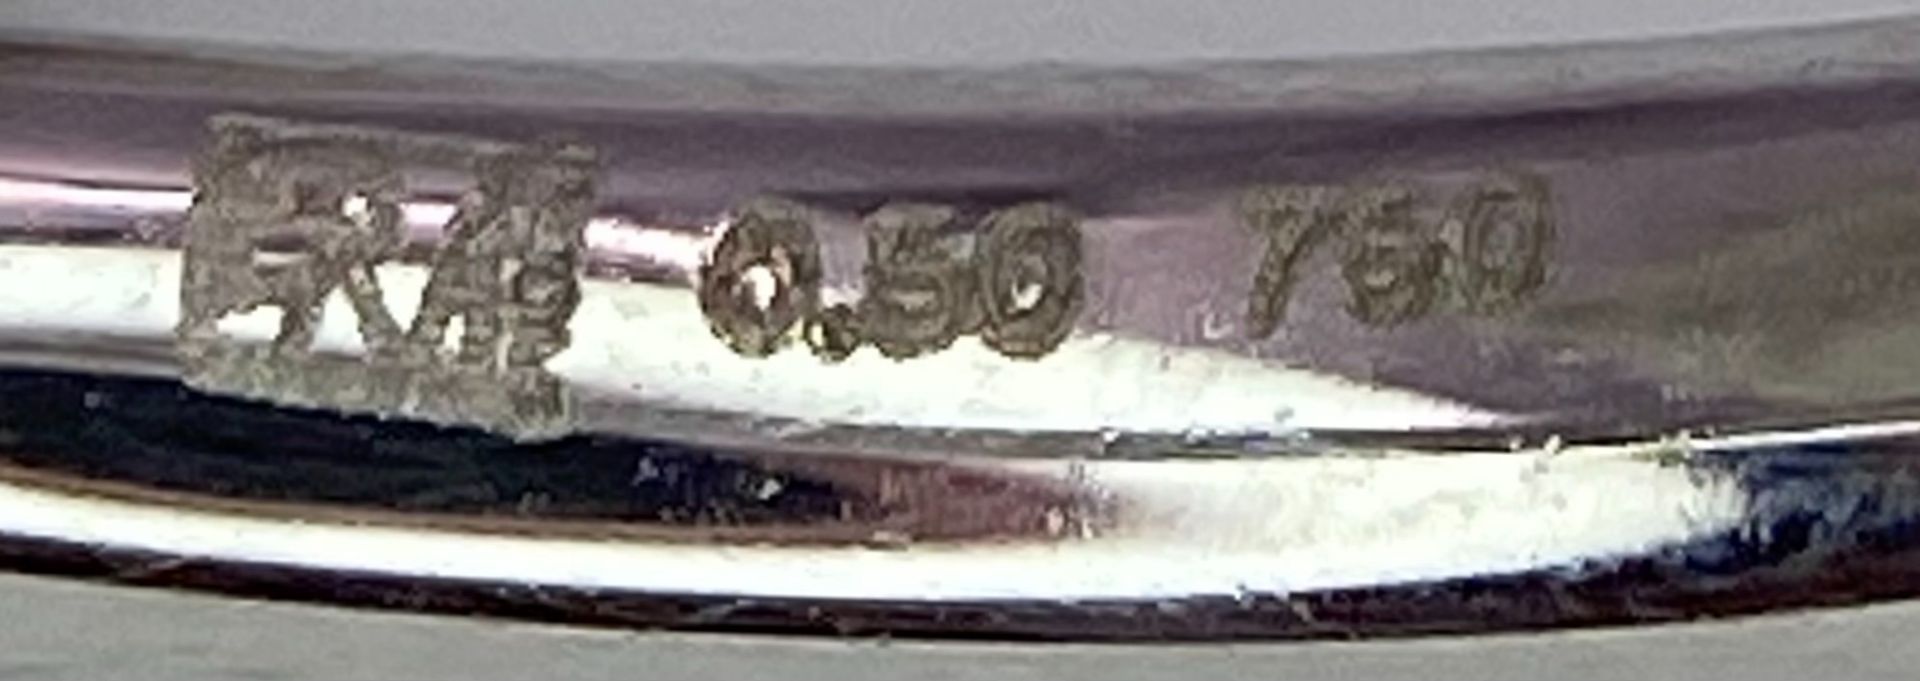 AN 18K WHITE GOLD DIAMOND SOLITAIRE RING WITH FOUR DIAMOND TURRETS - 0.50CT 4.6G. SIZE M 1/2. - Bild 9 aus 10